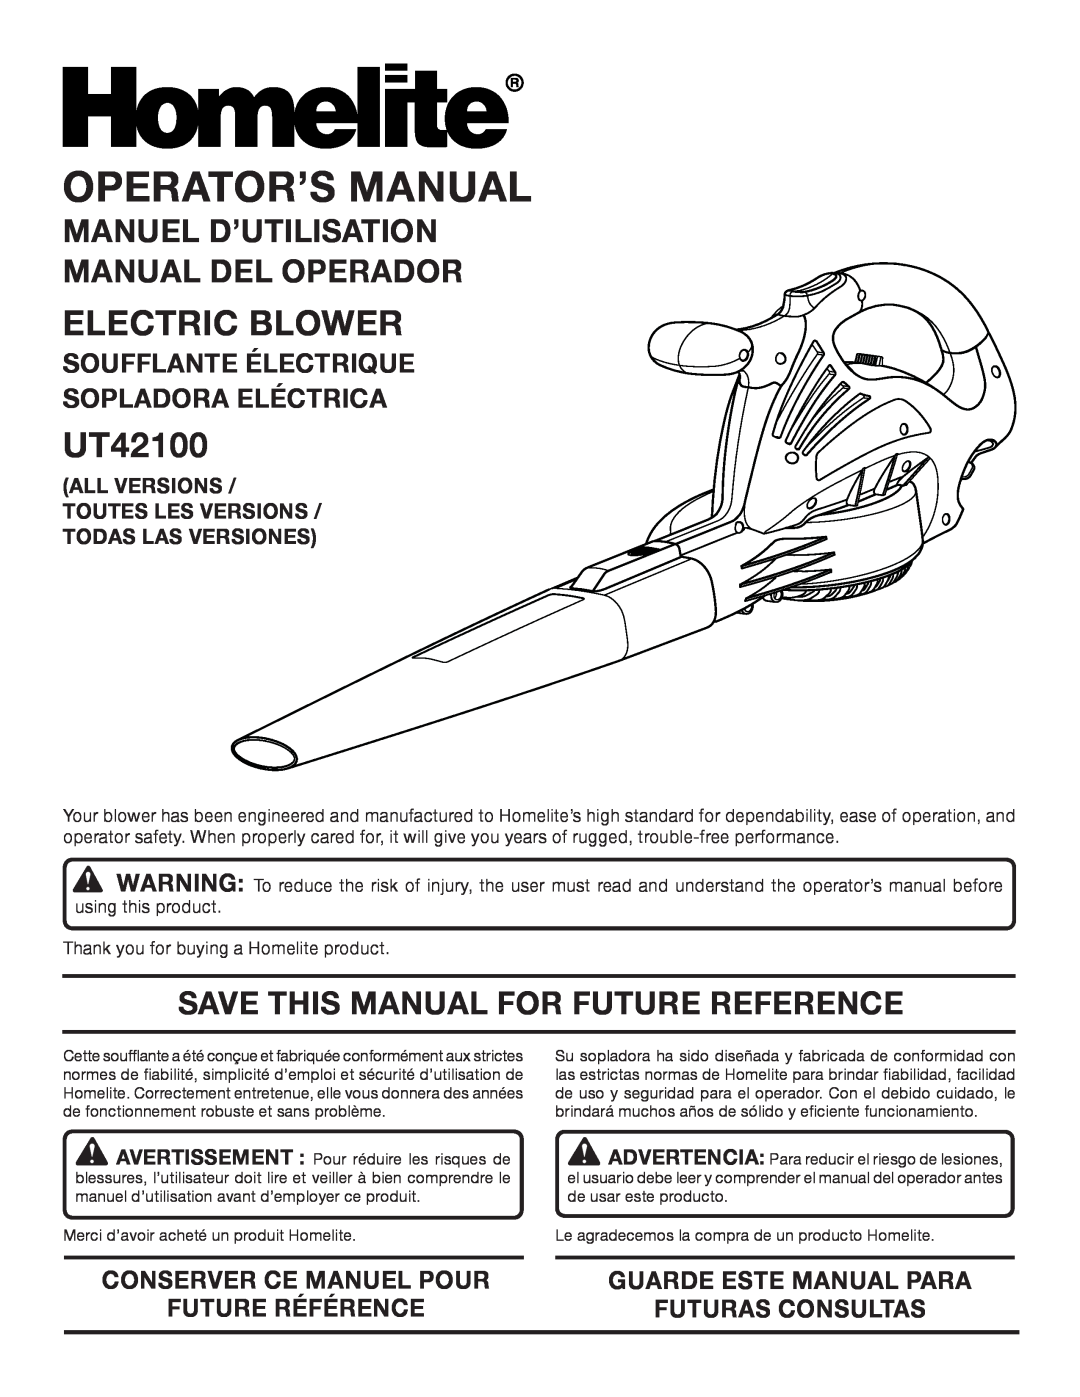 Homelite manuel dutilisation Electric blower, UT42100 , Manuel D’Utilisation Manual Del Operador, Operator’S Manual 